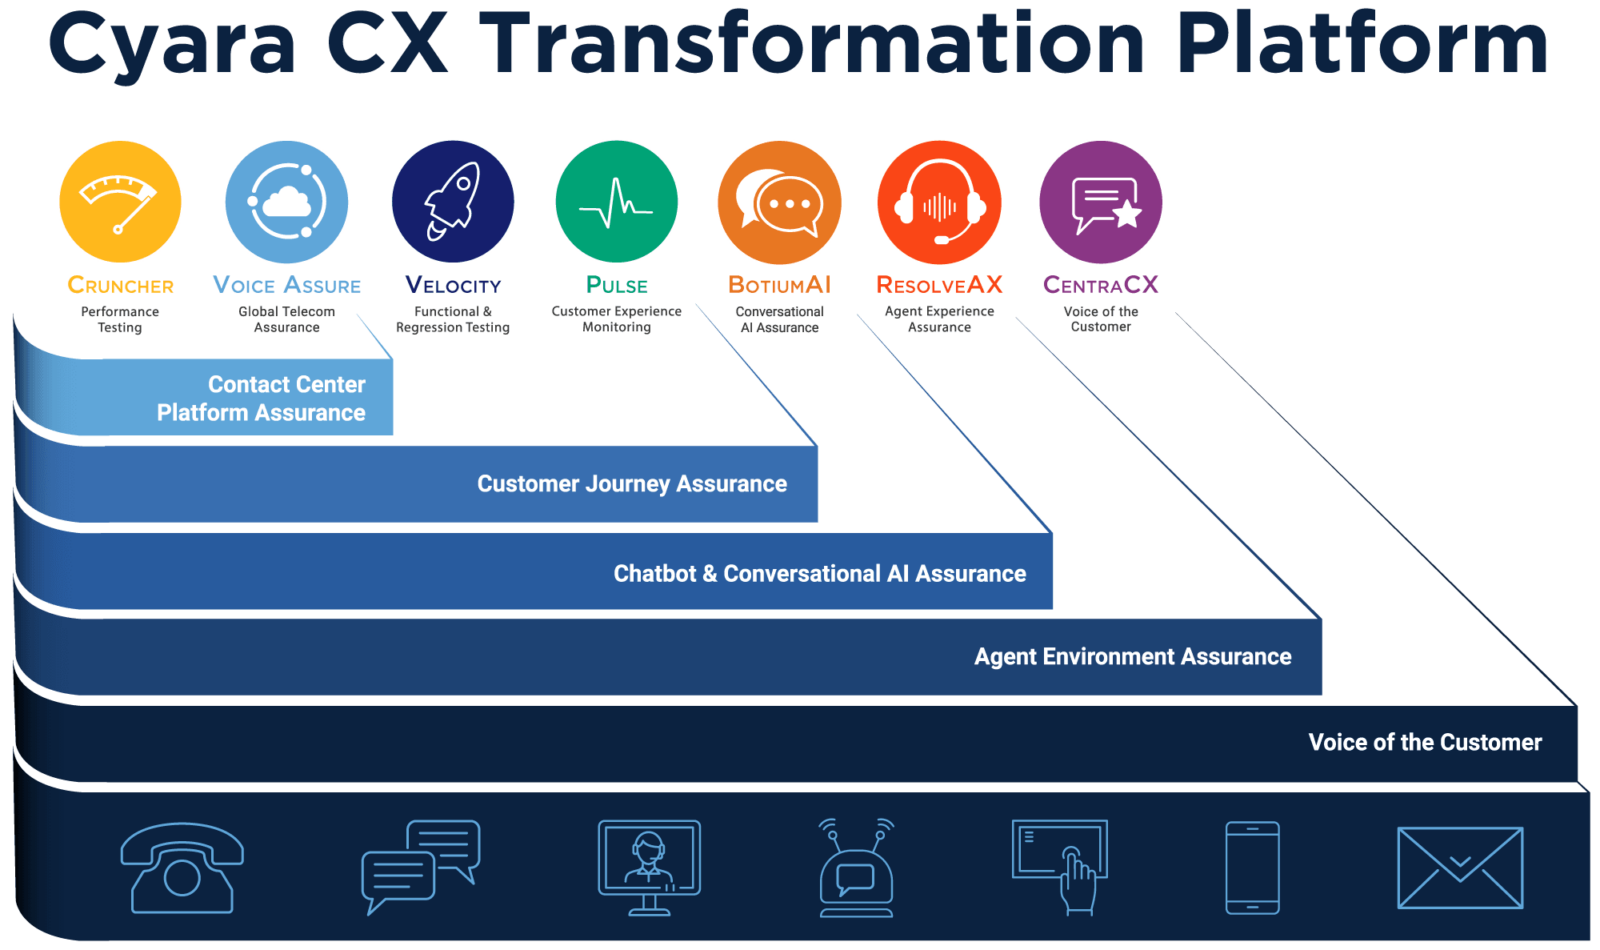 Cyara CX Transformation Platform-products including Cruncher, Voice Assure, Velocity, Pulse, BotiuAI, ResolveAX, CentraCX